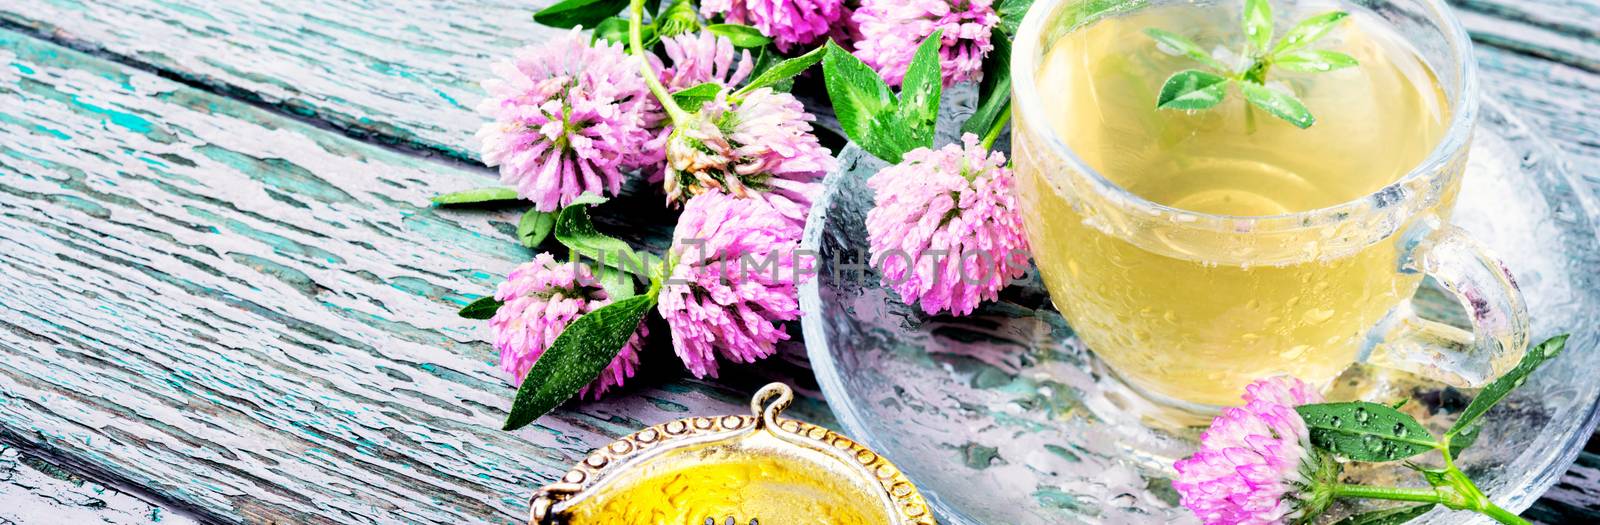 Healthy tea with clover by LMykola